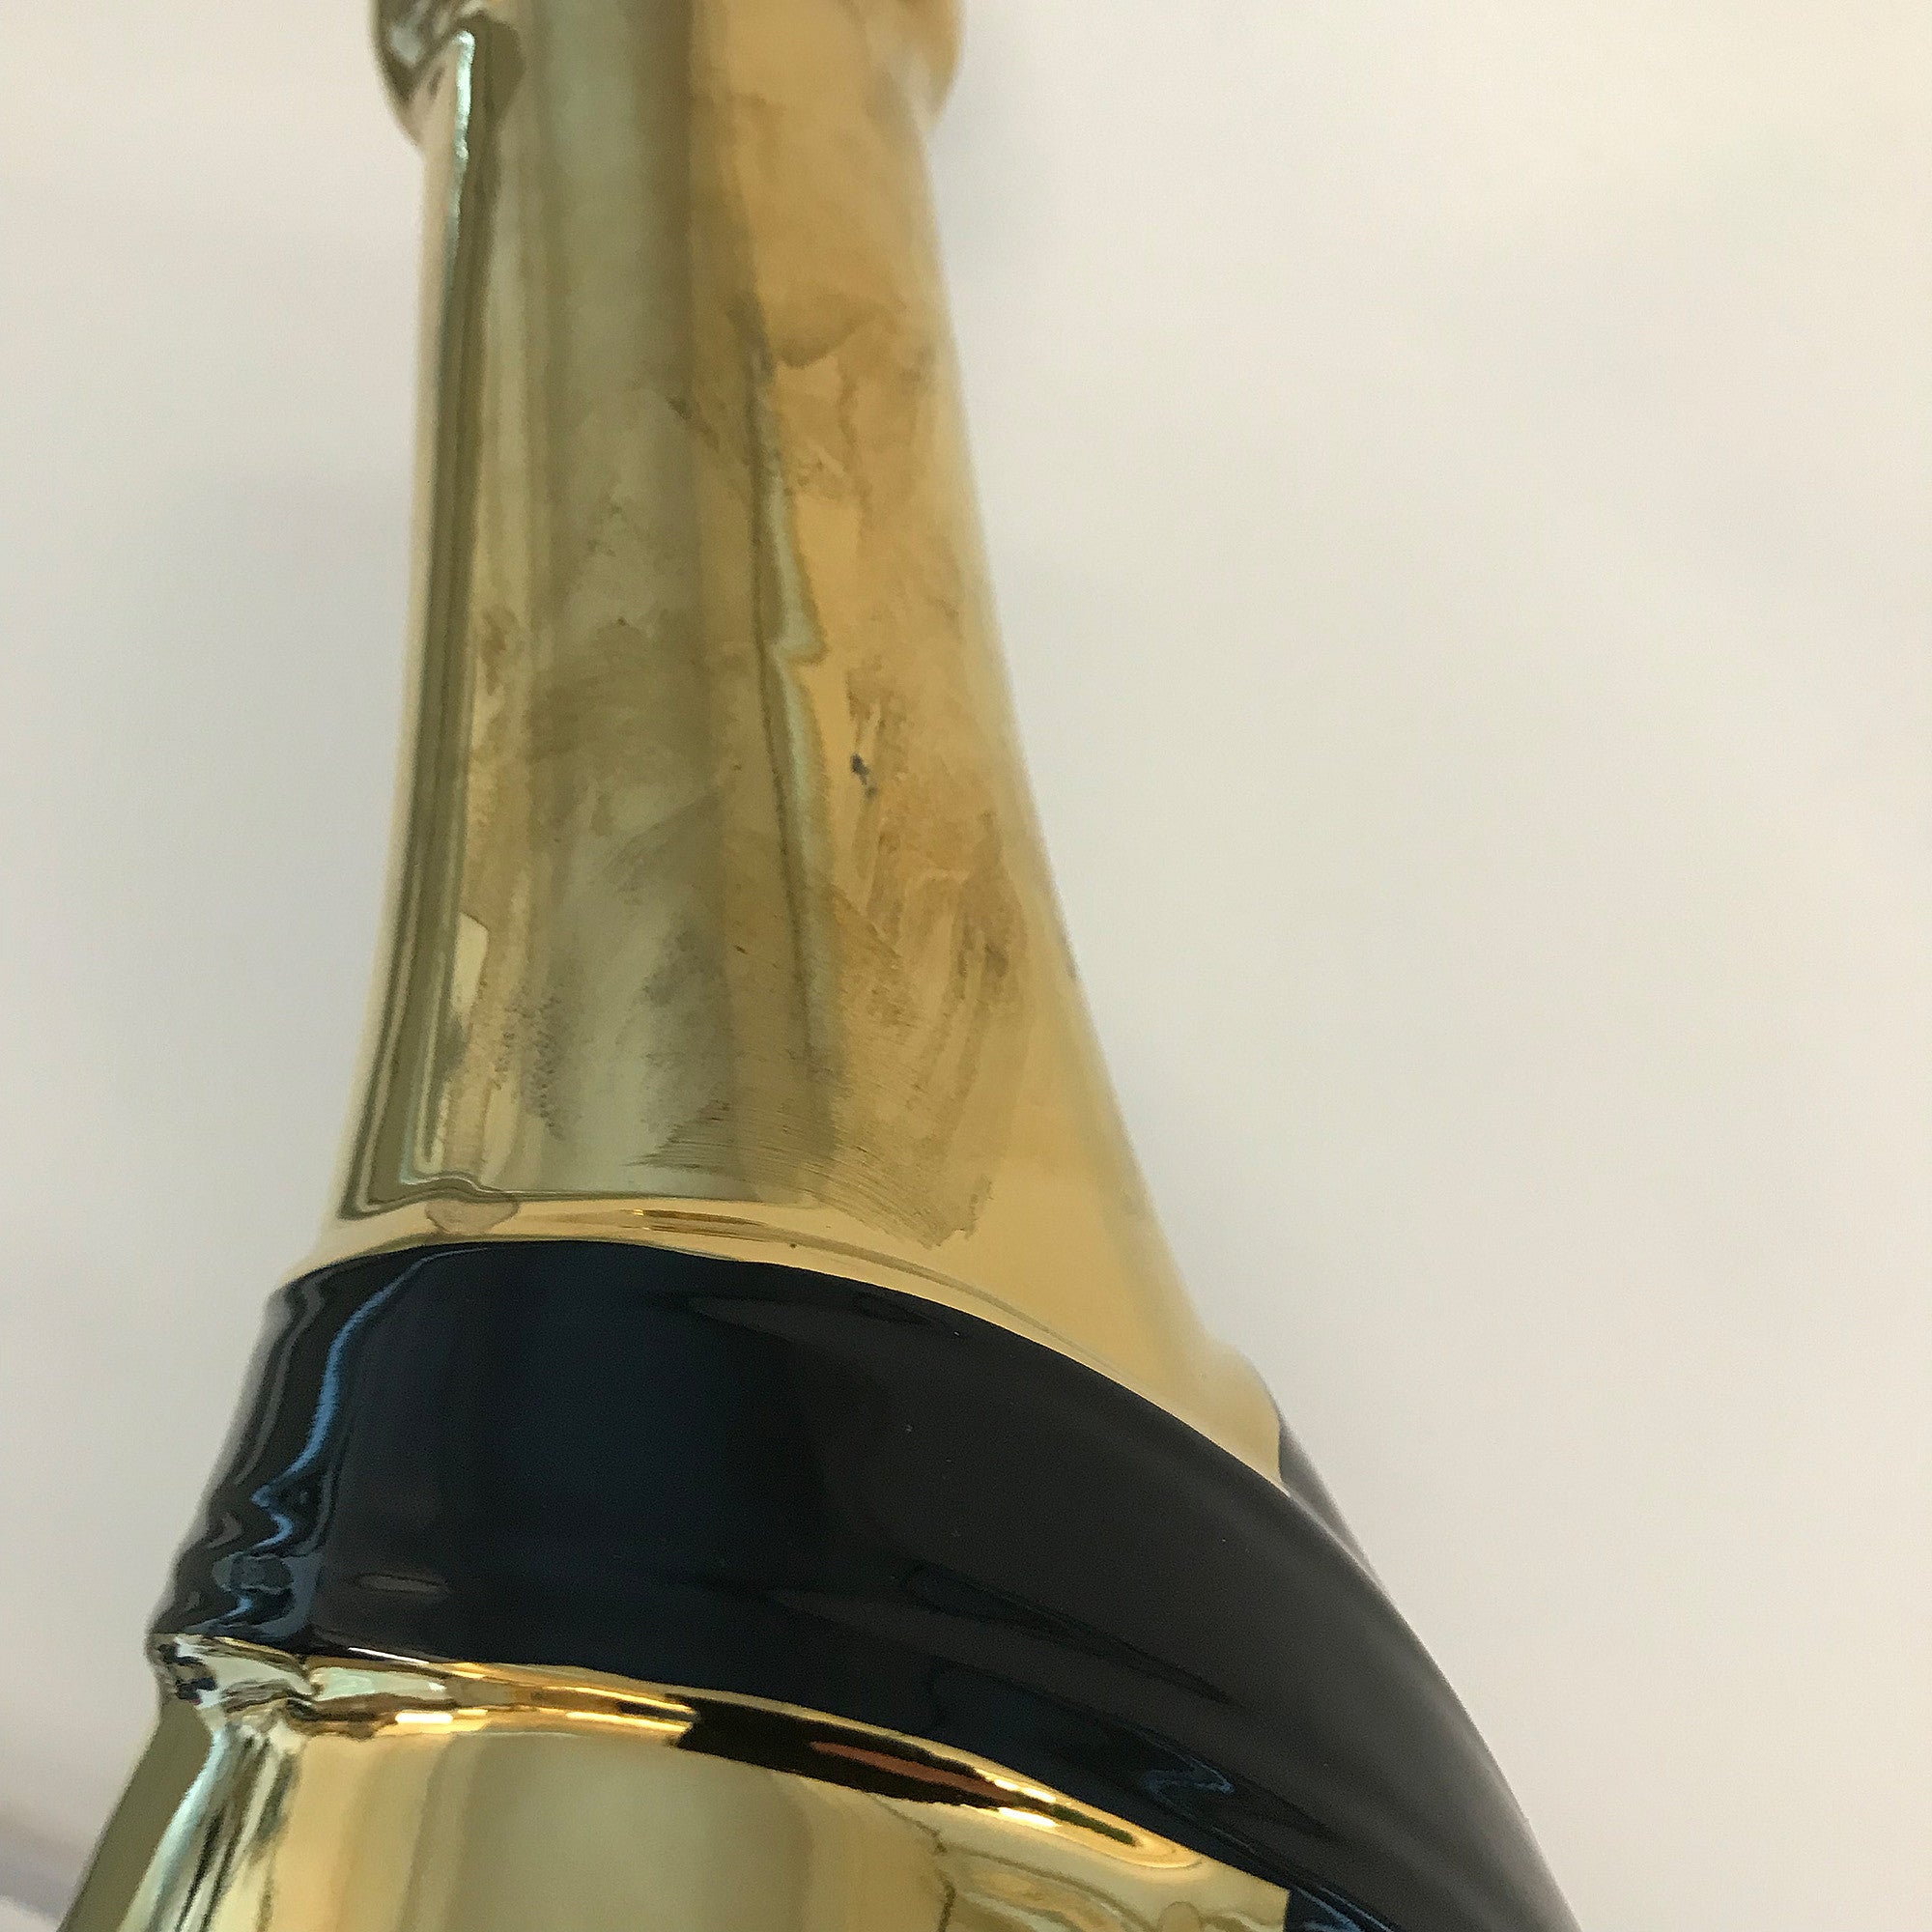 Decorative Gold Champagne Bottle (Second)